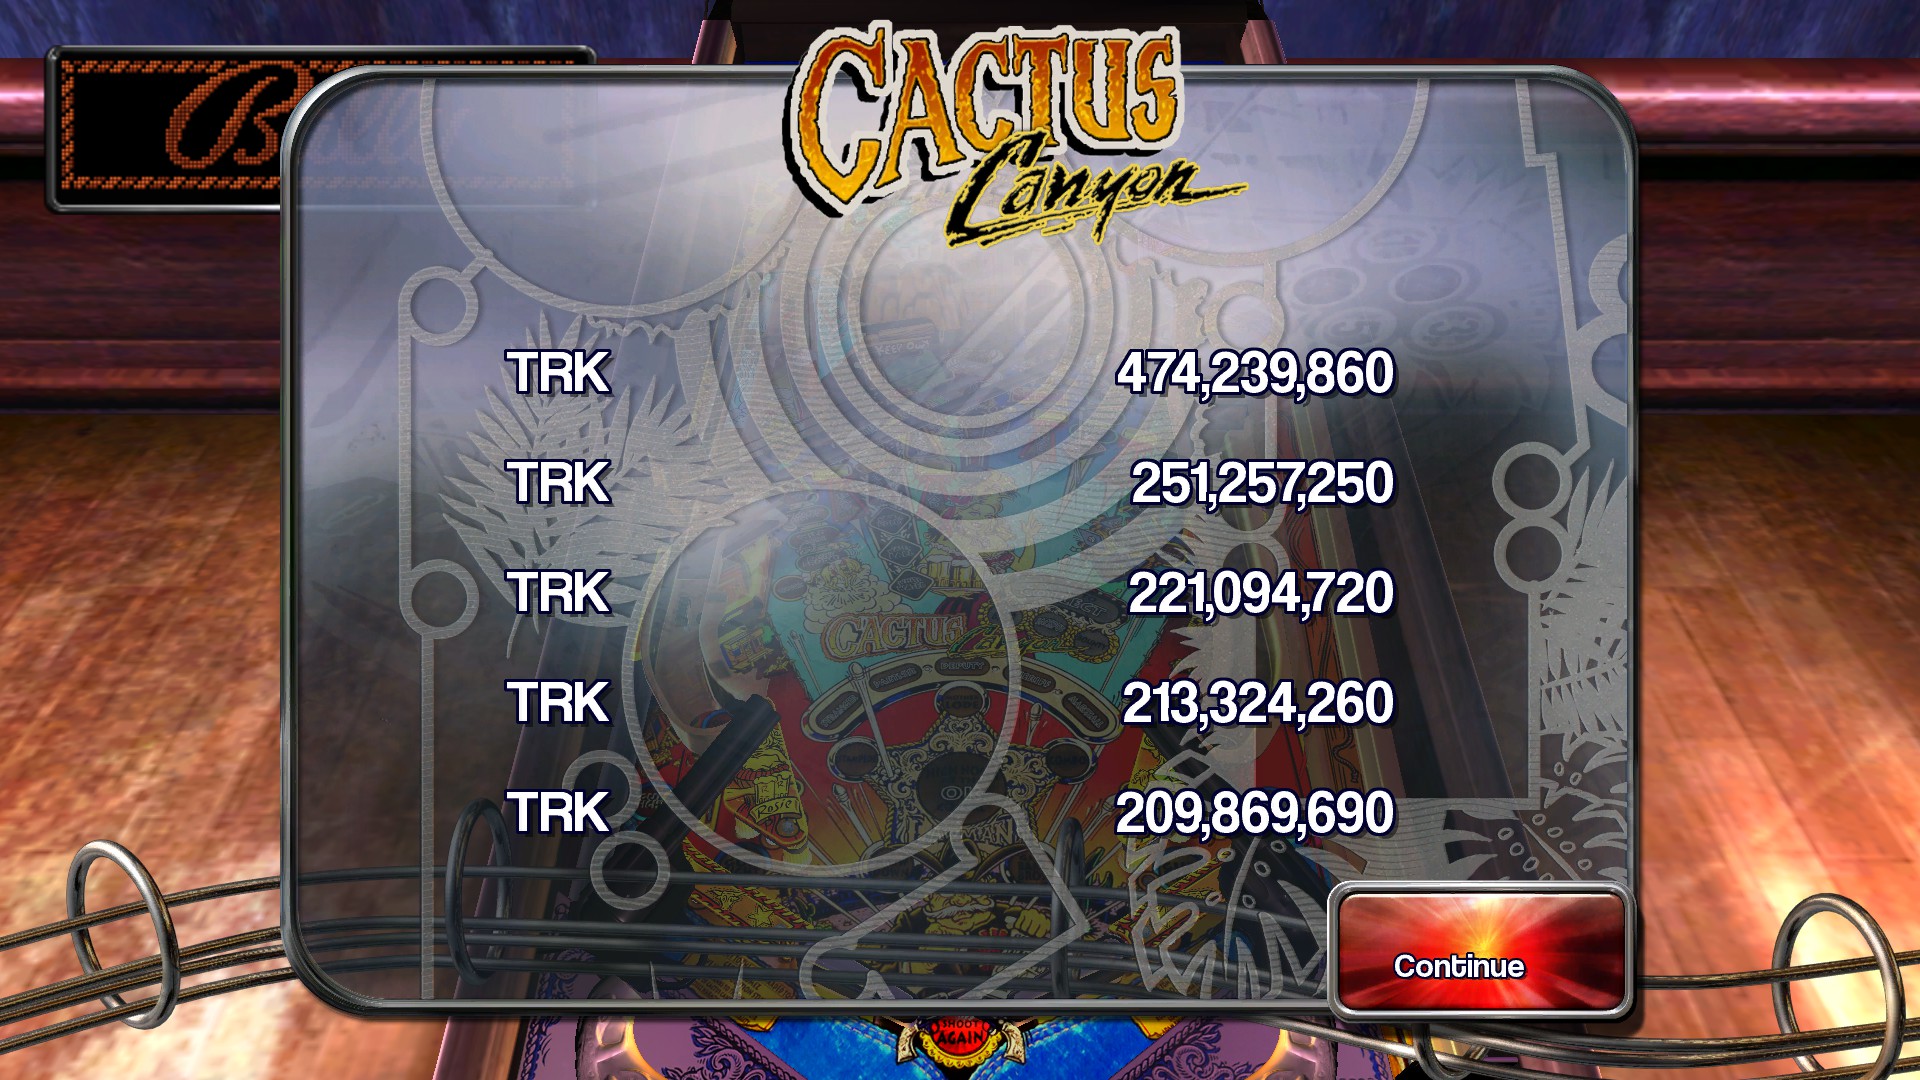 TheTrickster: Pinball Arcade: Cactus Canyon (PC) 474,239,860 points on 2016-04-12 08:26:31